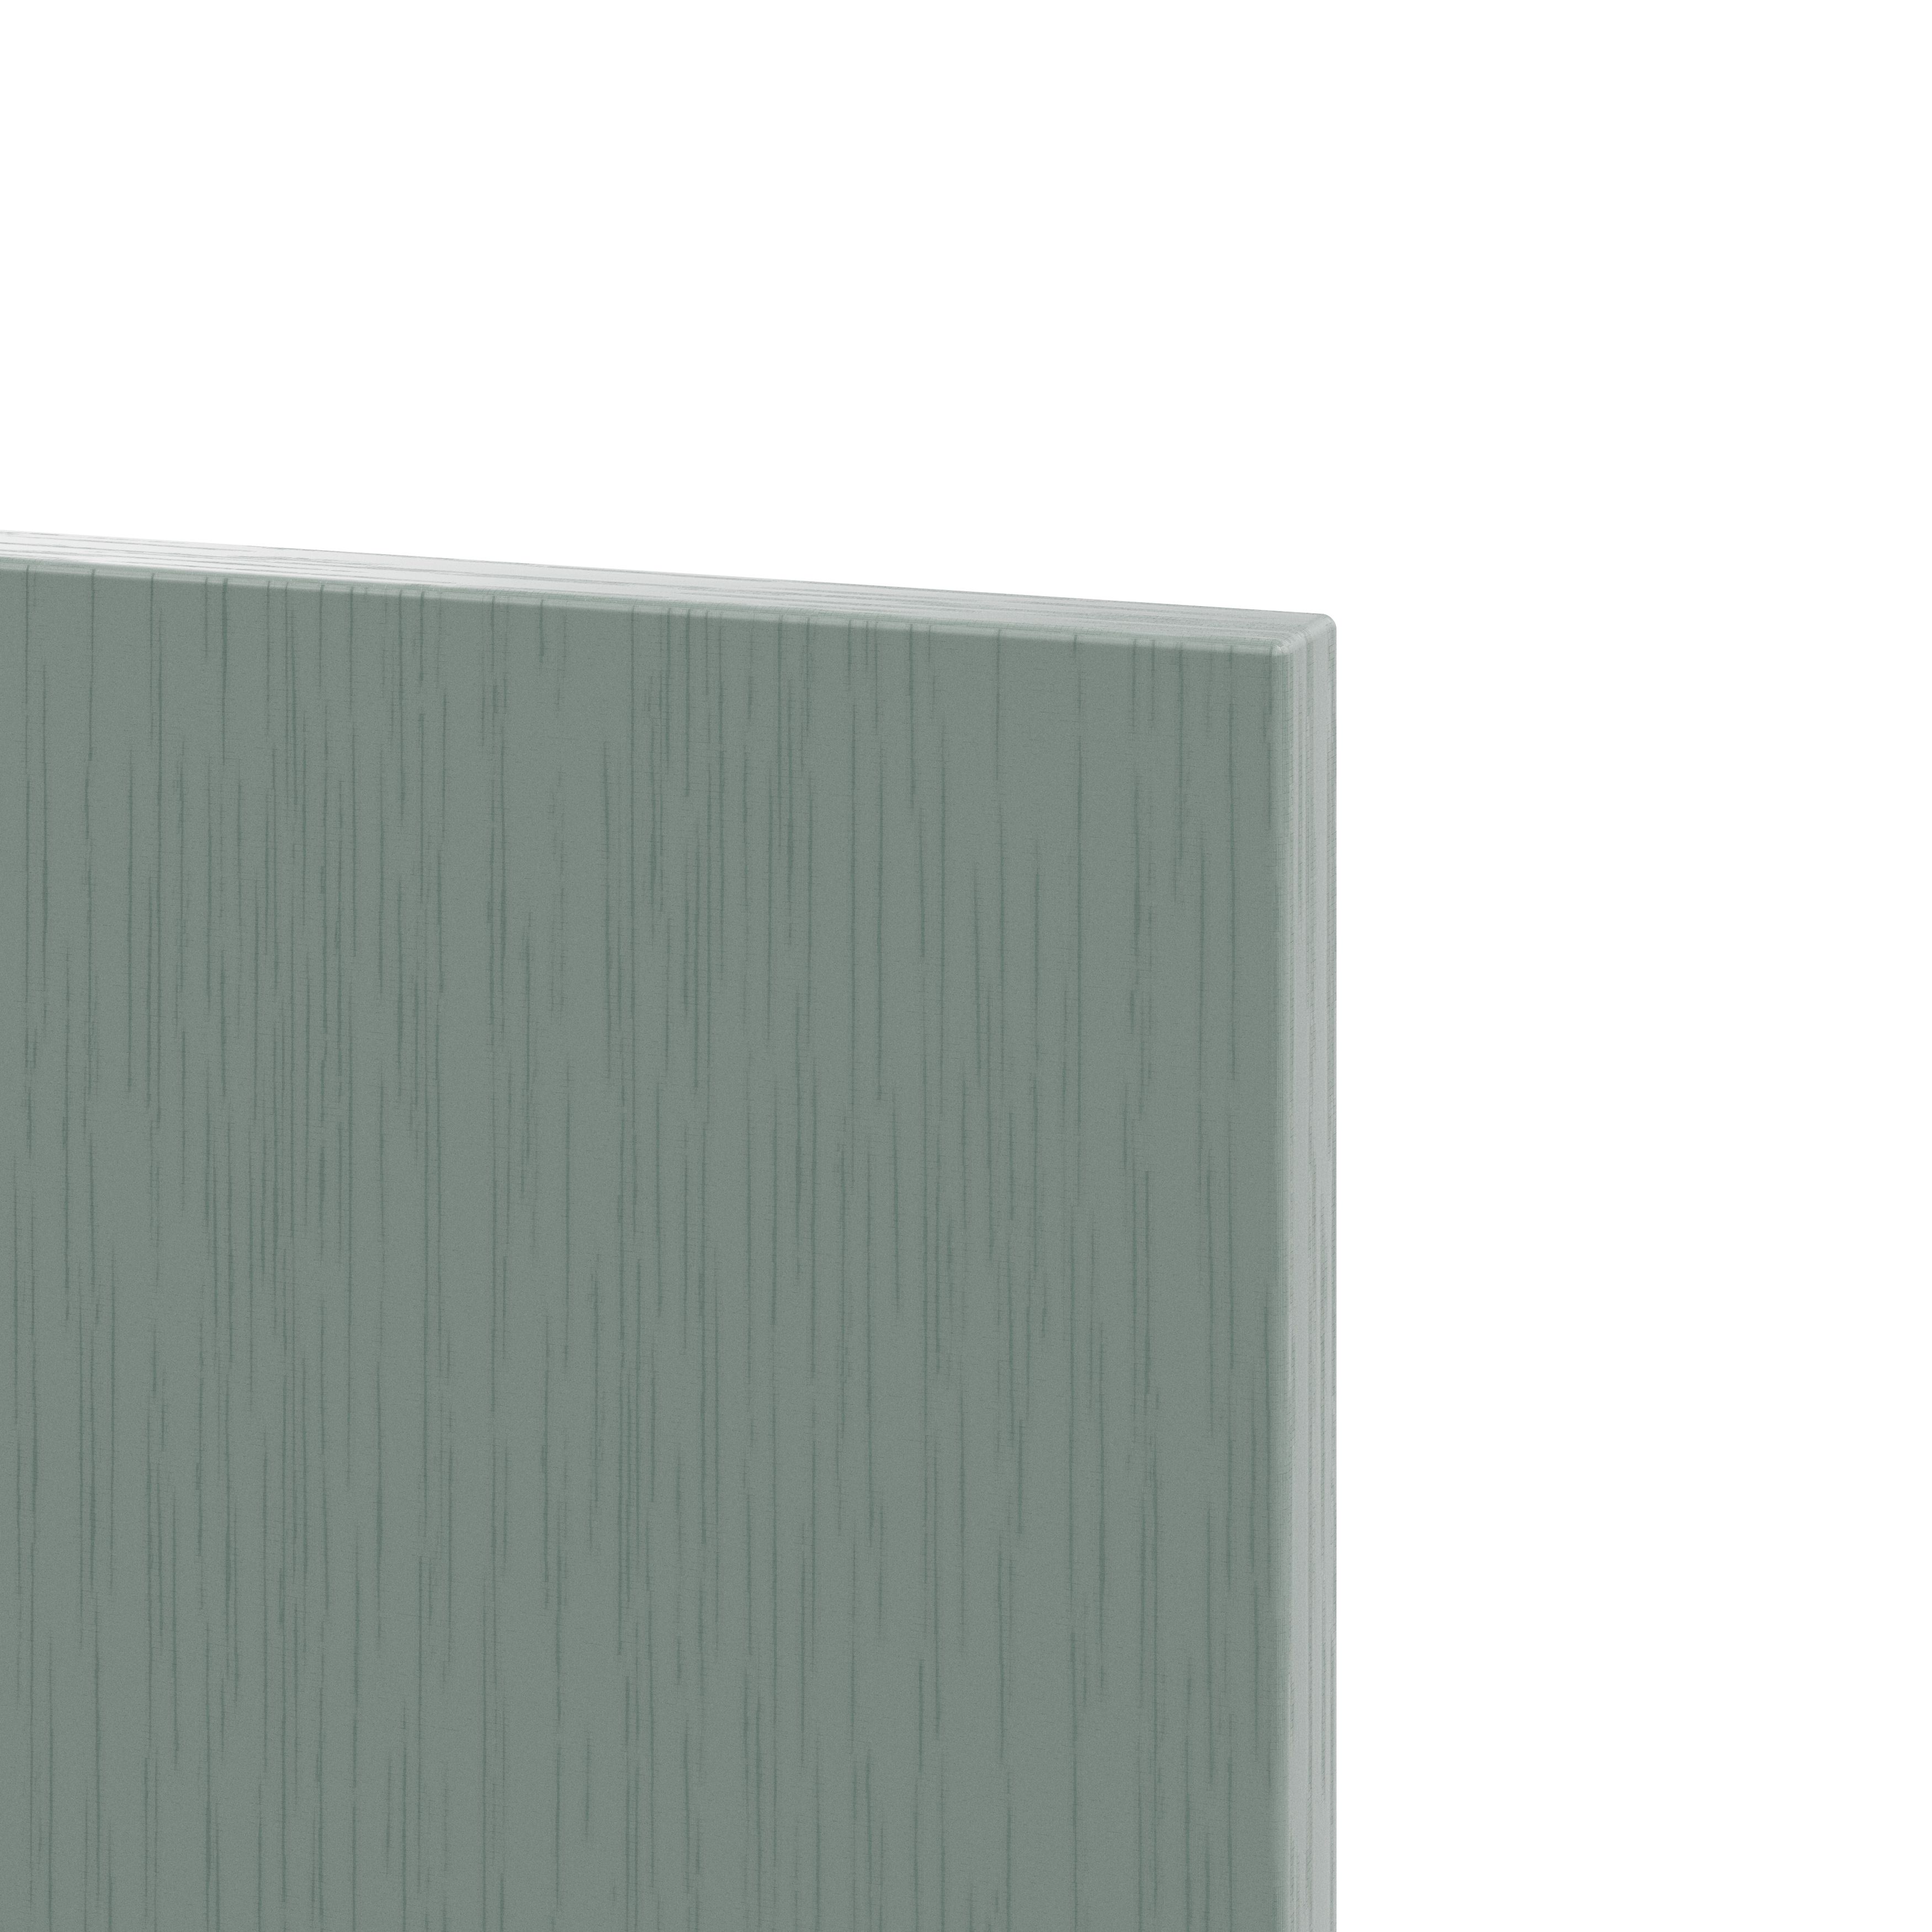 GoodHome Alpinia Matt Green Painted Wood Effect Shaker Standard Wall Clad on end panel (H)960mm (W)360mm